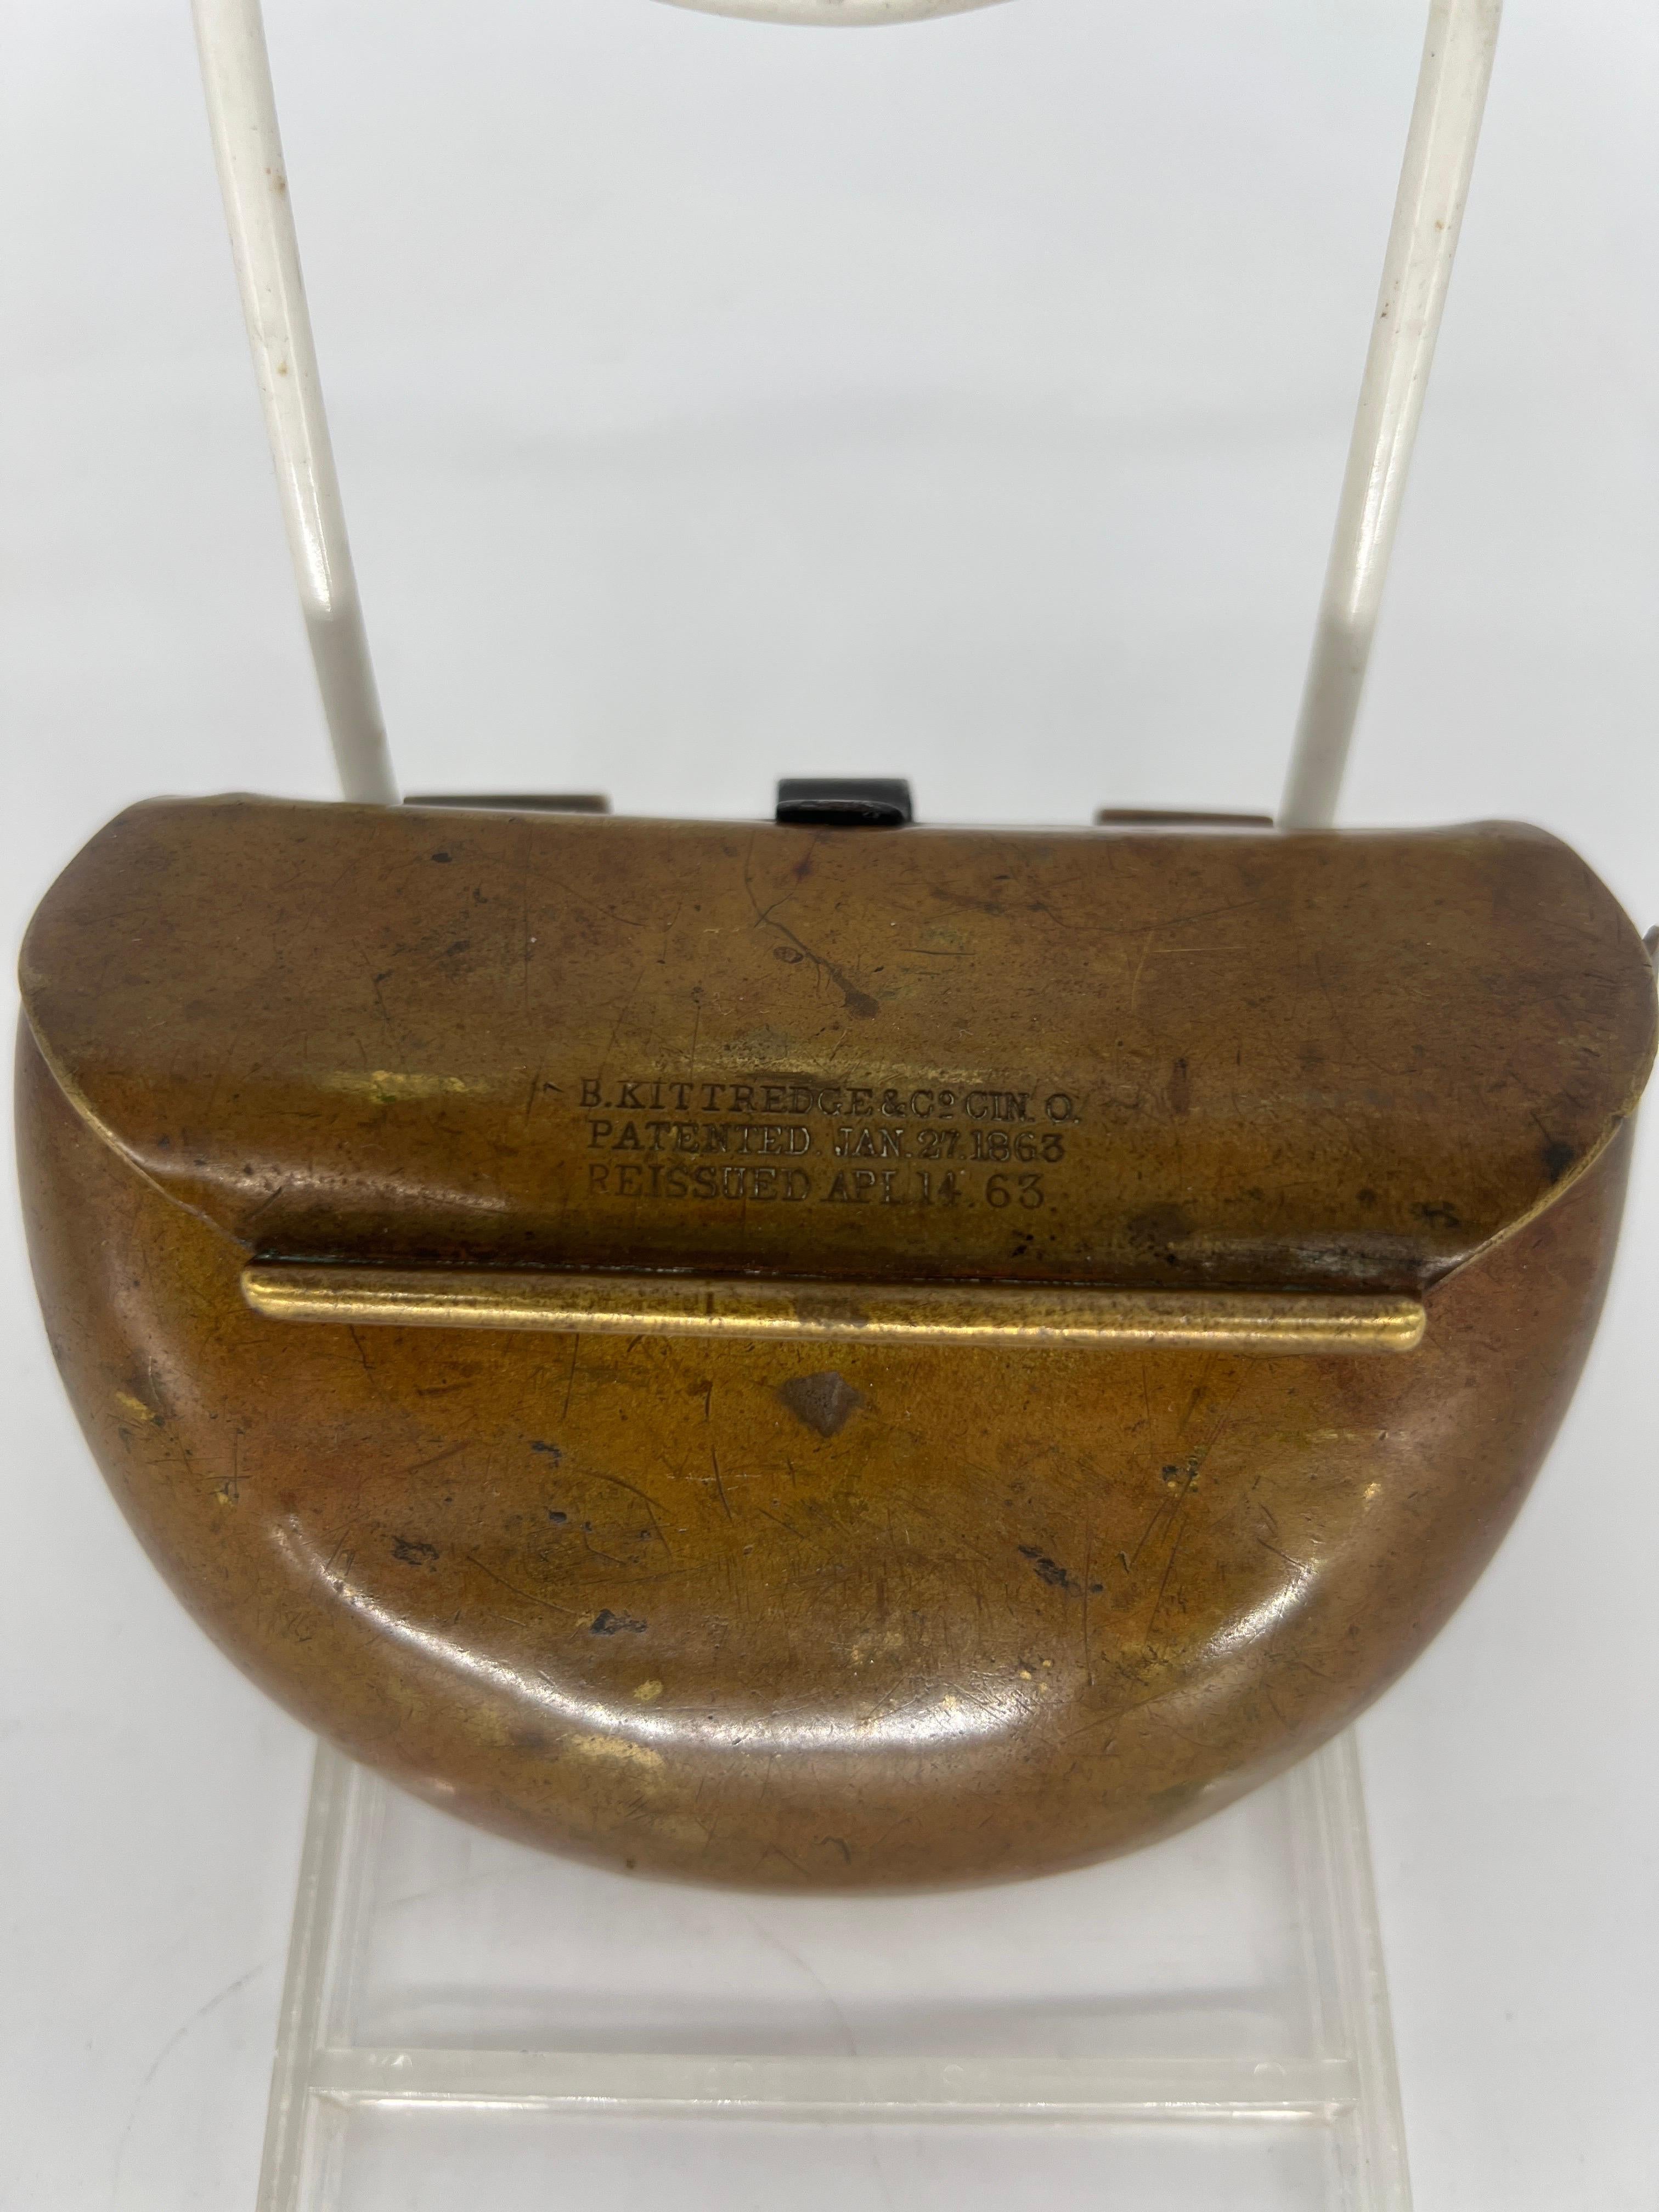 Authentic 1863 B. Kittredge & Company Copper Cartridge Box, c. 1863, copper cartridge box, spring-loaded lid marked 